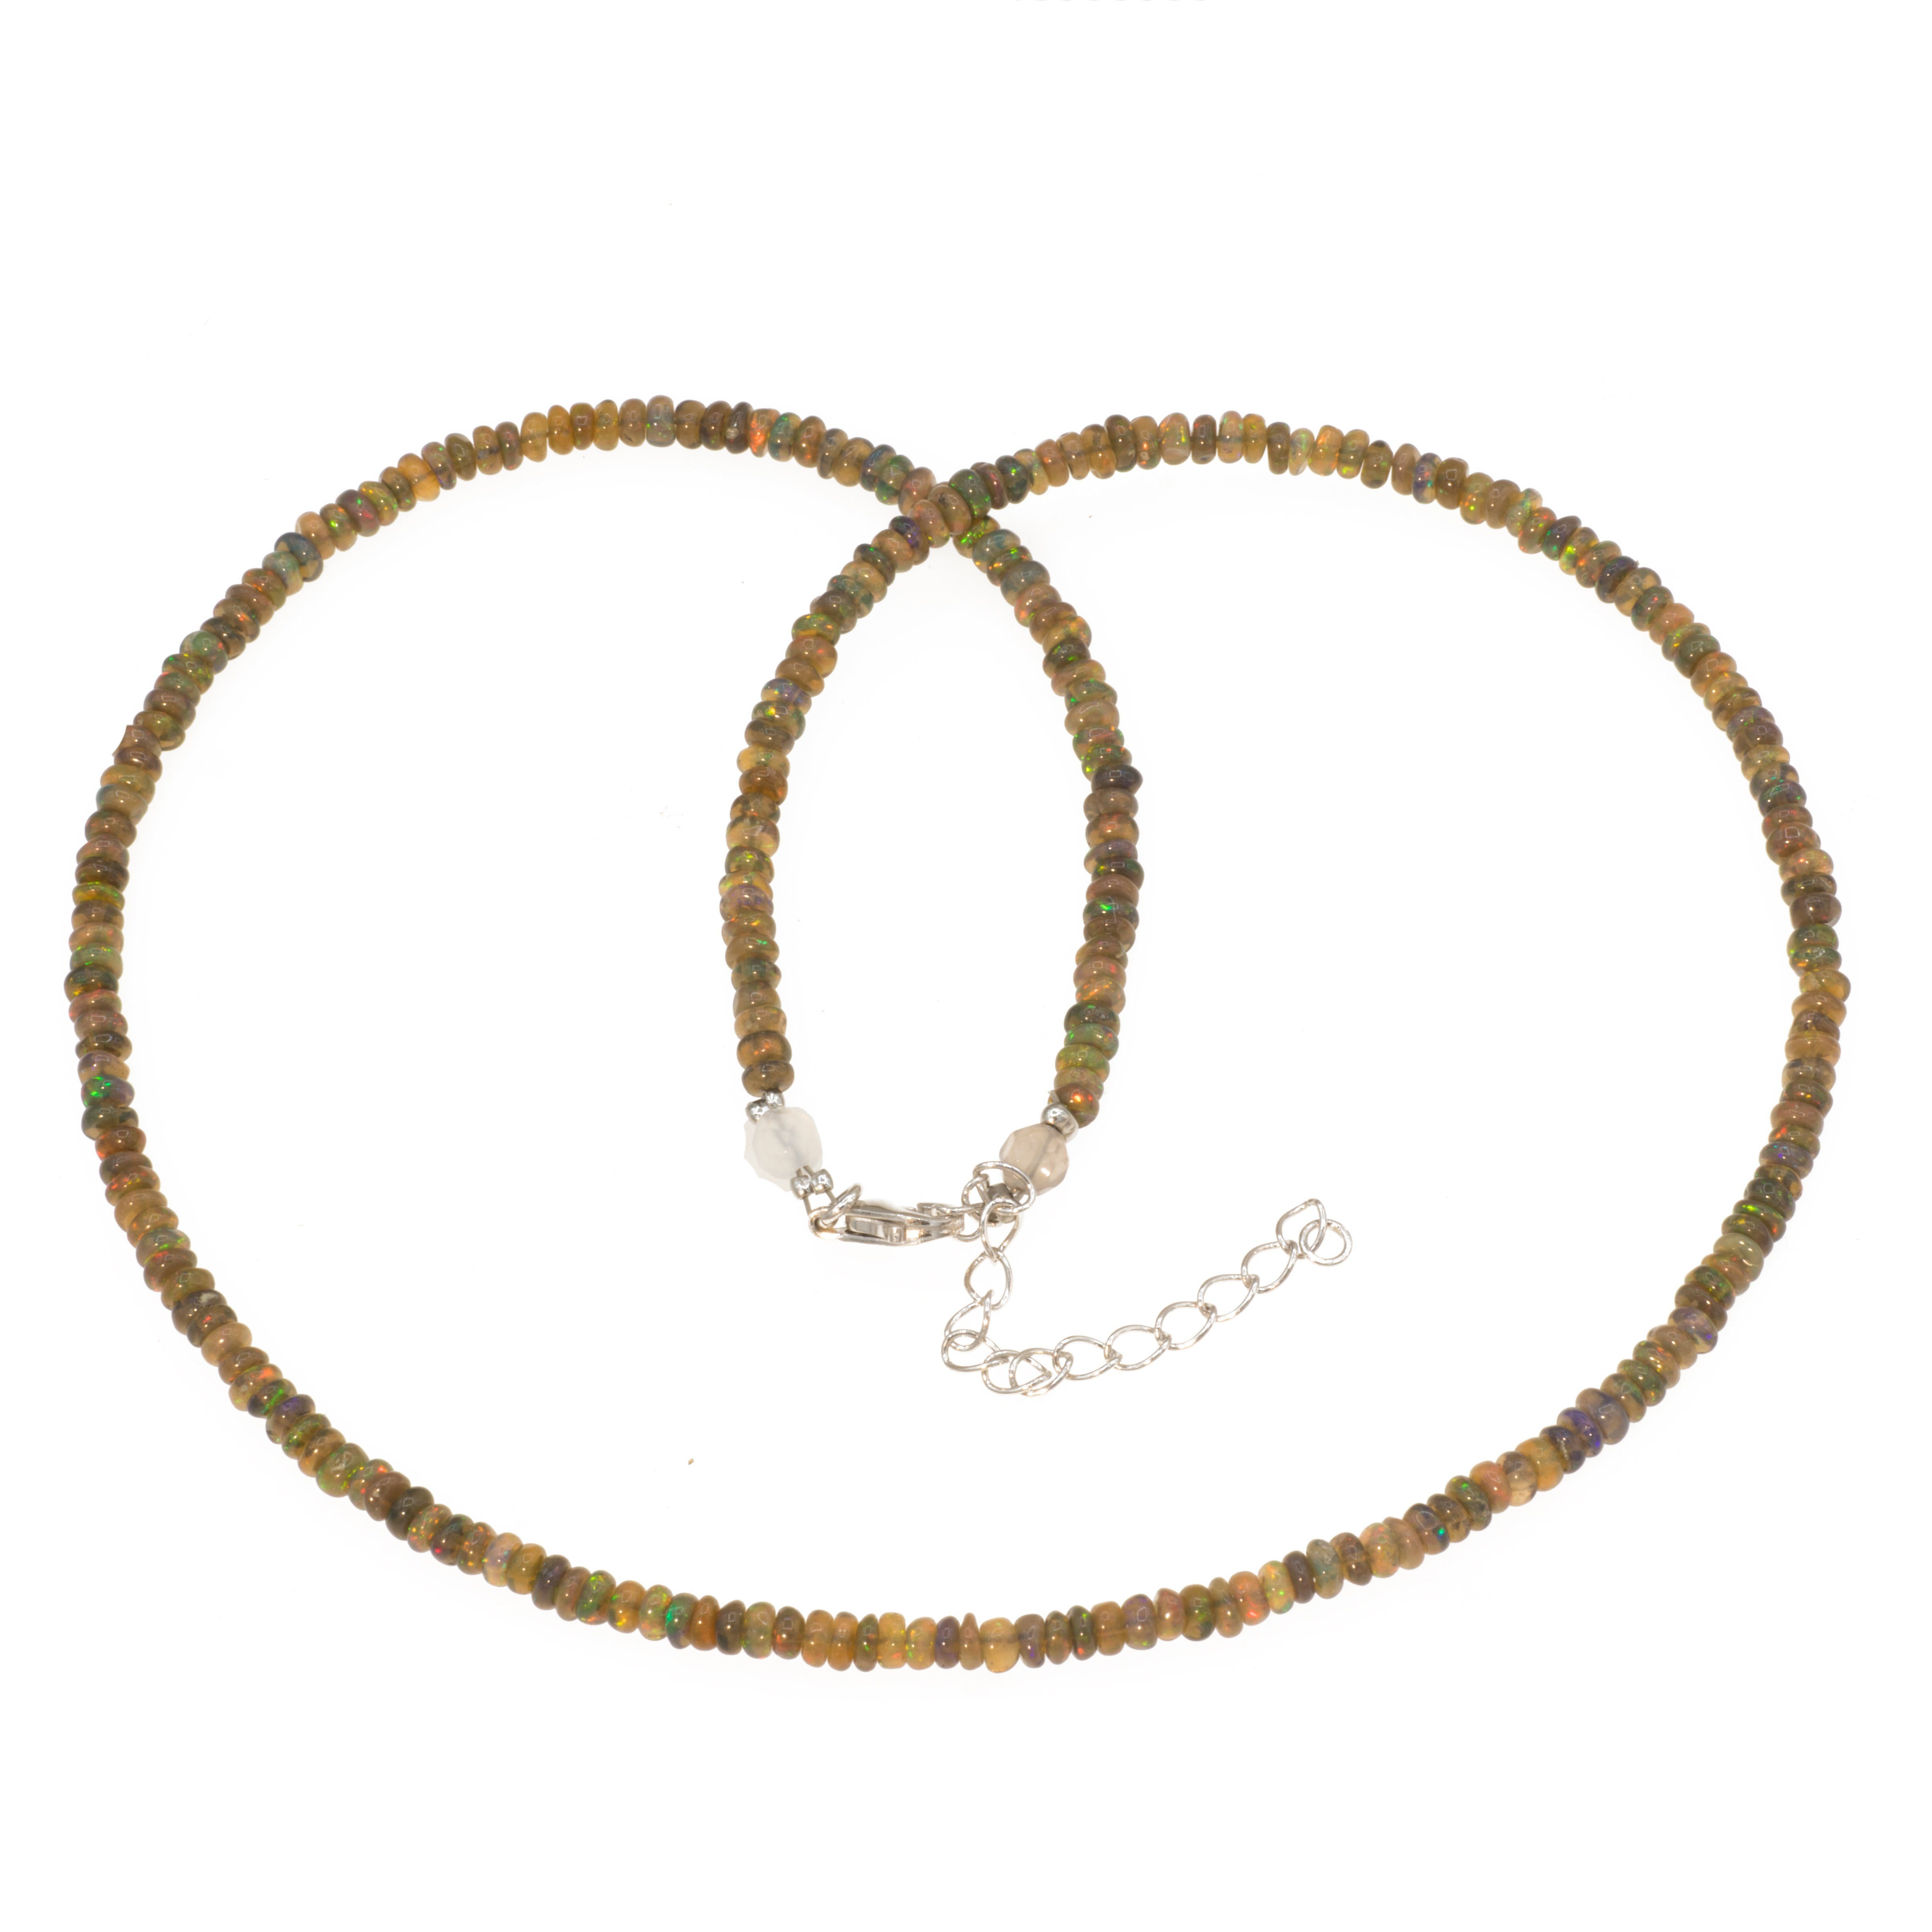 Bella Carina Perlenkette Schwarz mit Opal Kette Perlen, 3,5 mm, echter echtem Edel Schwarzopal